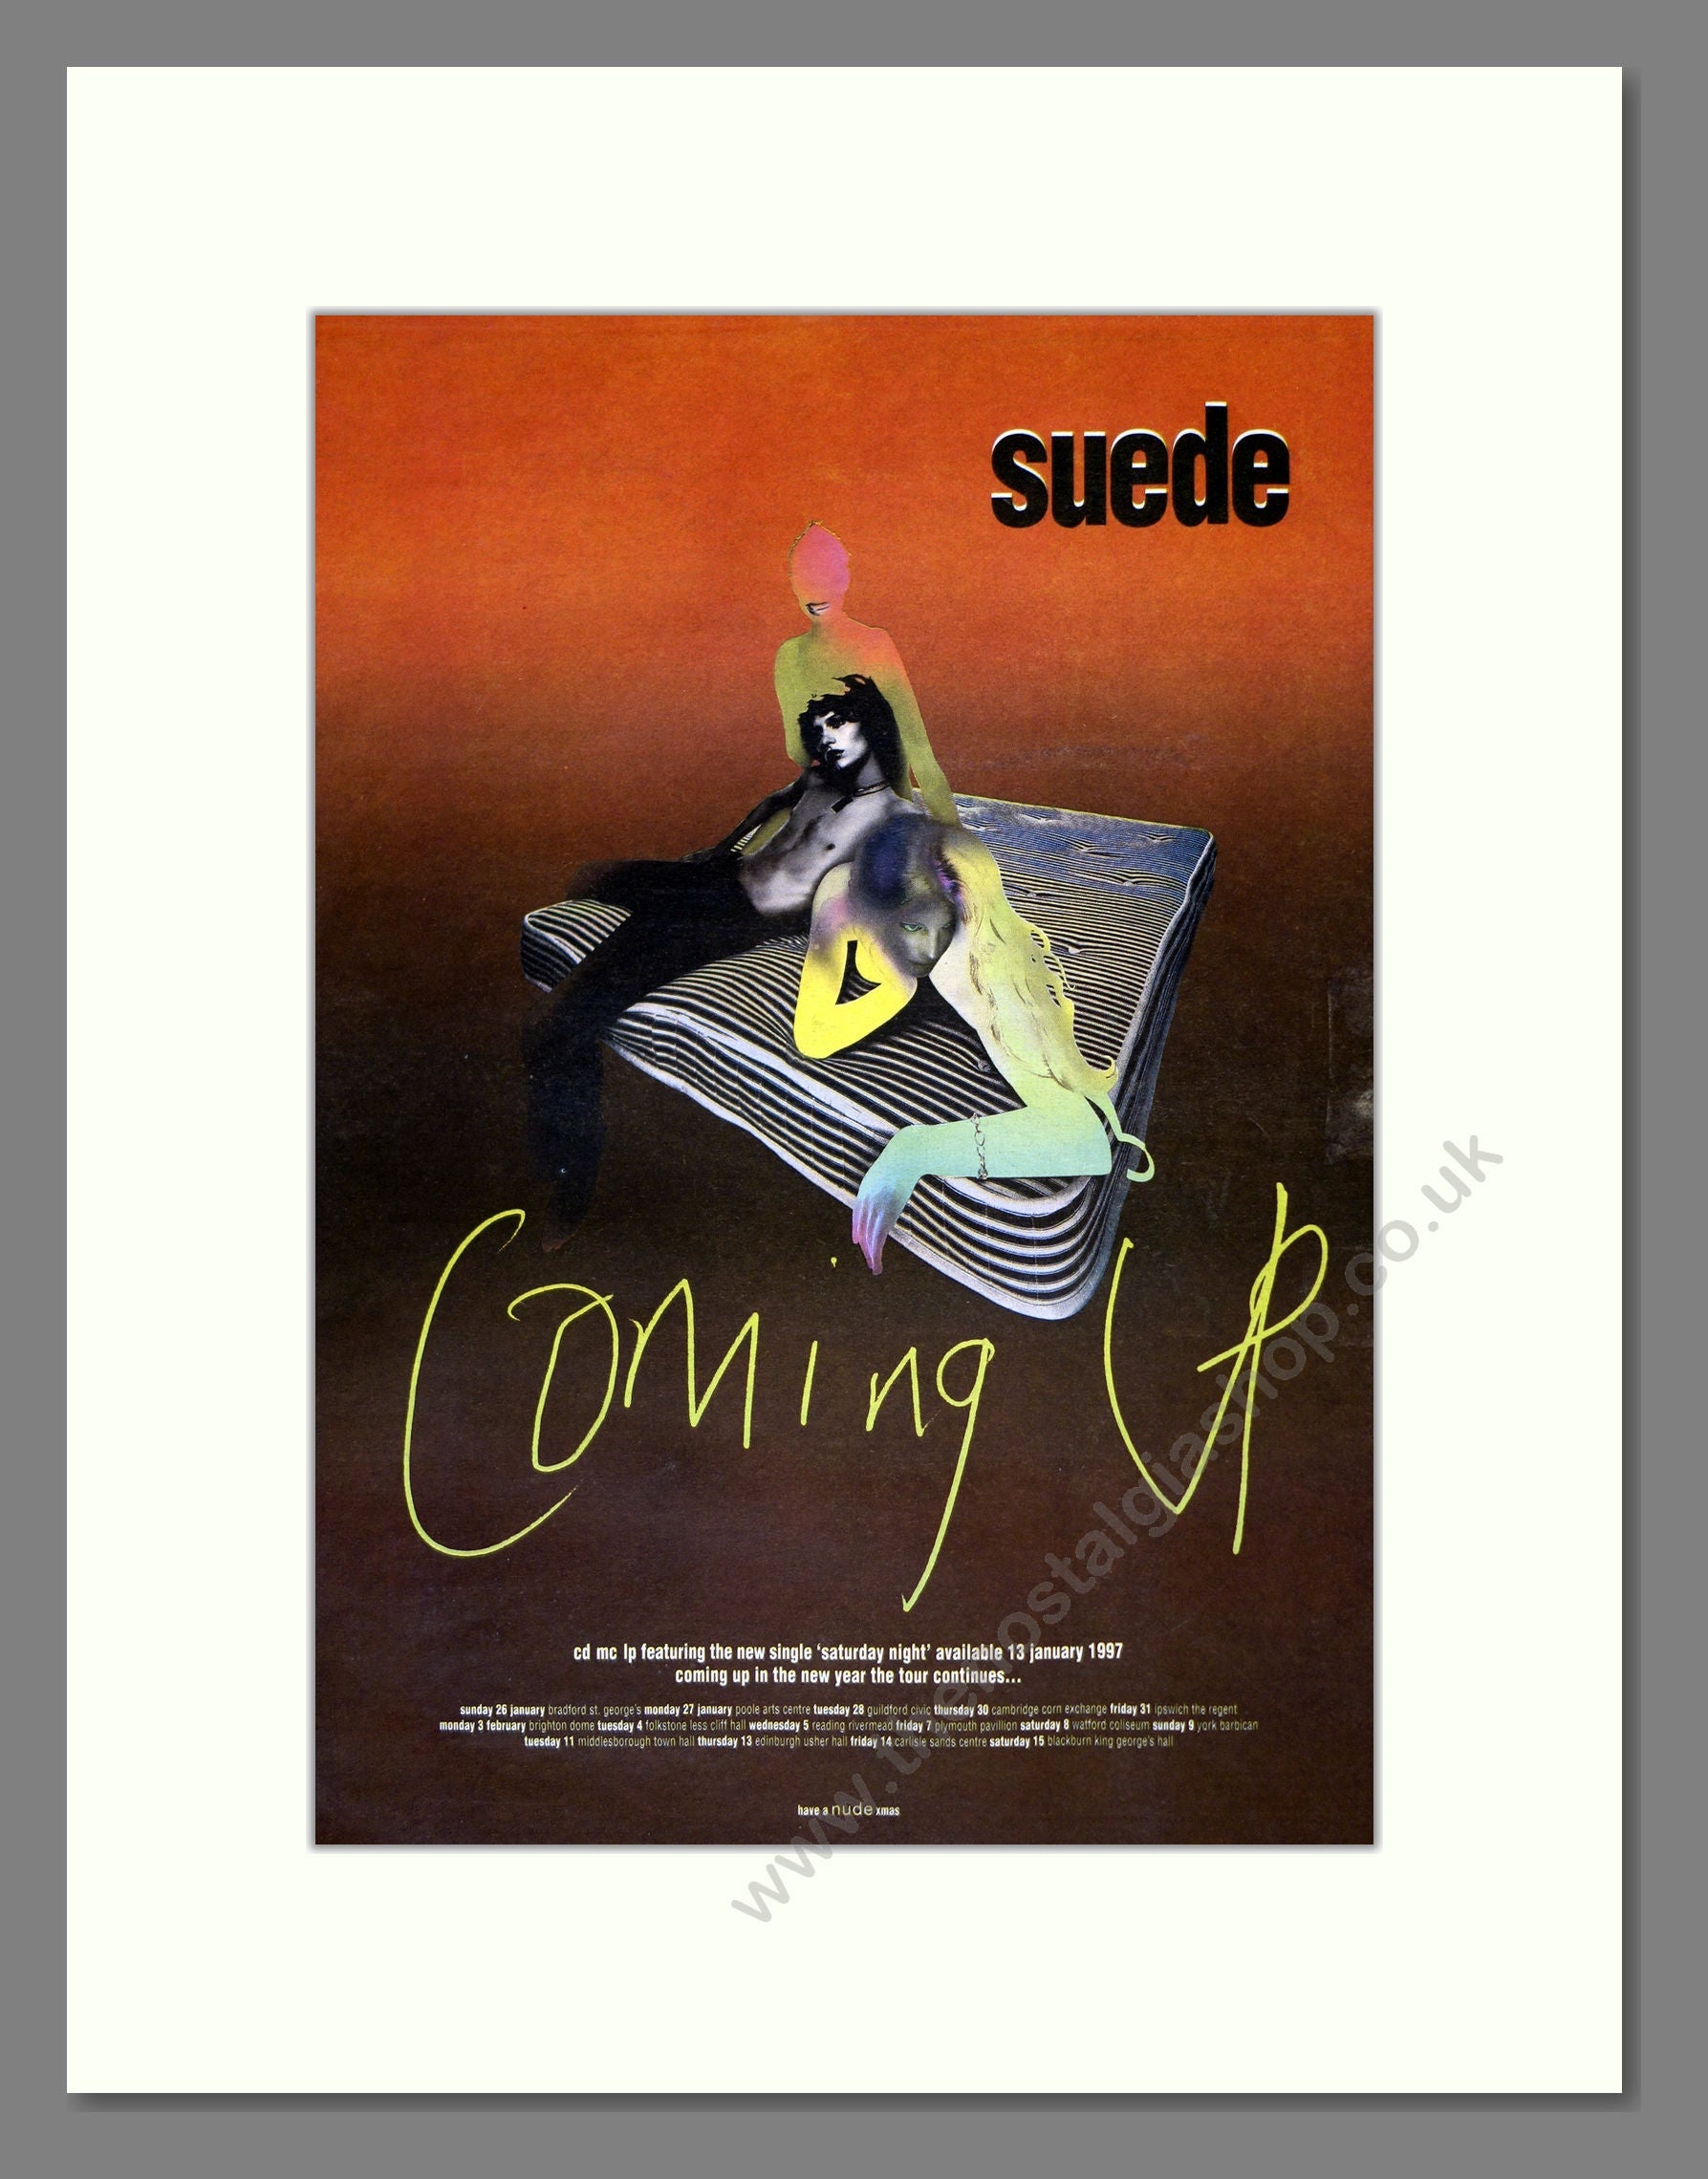 Suede - Coming Up. Vintage Advert 1996 (ref AD17891)